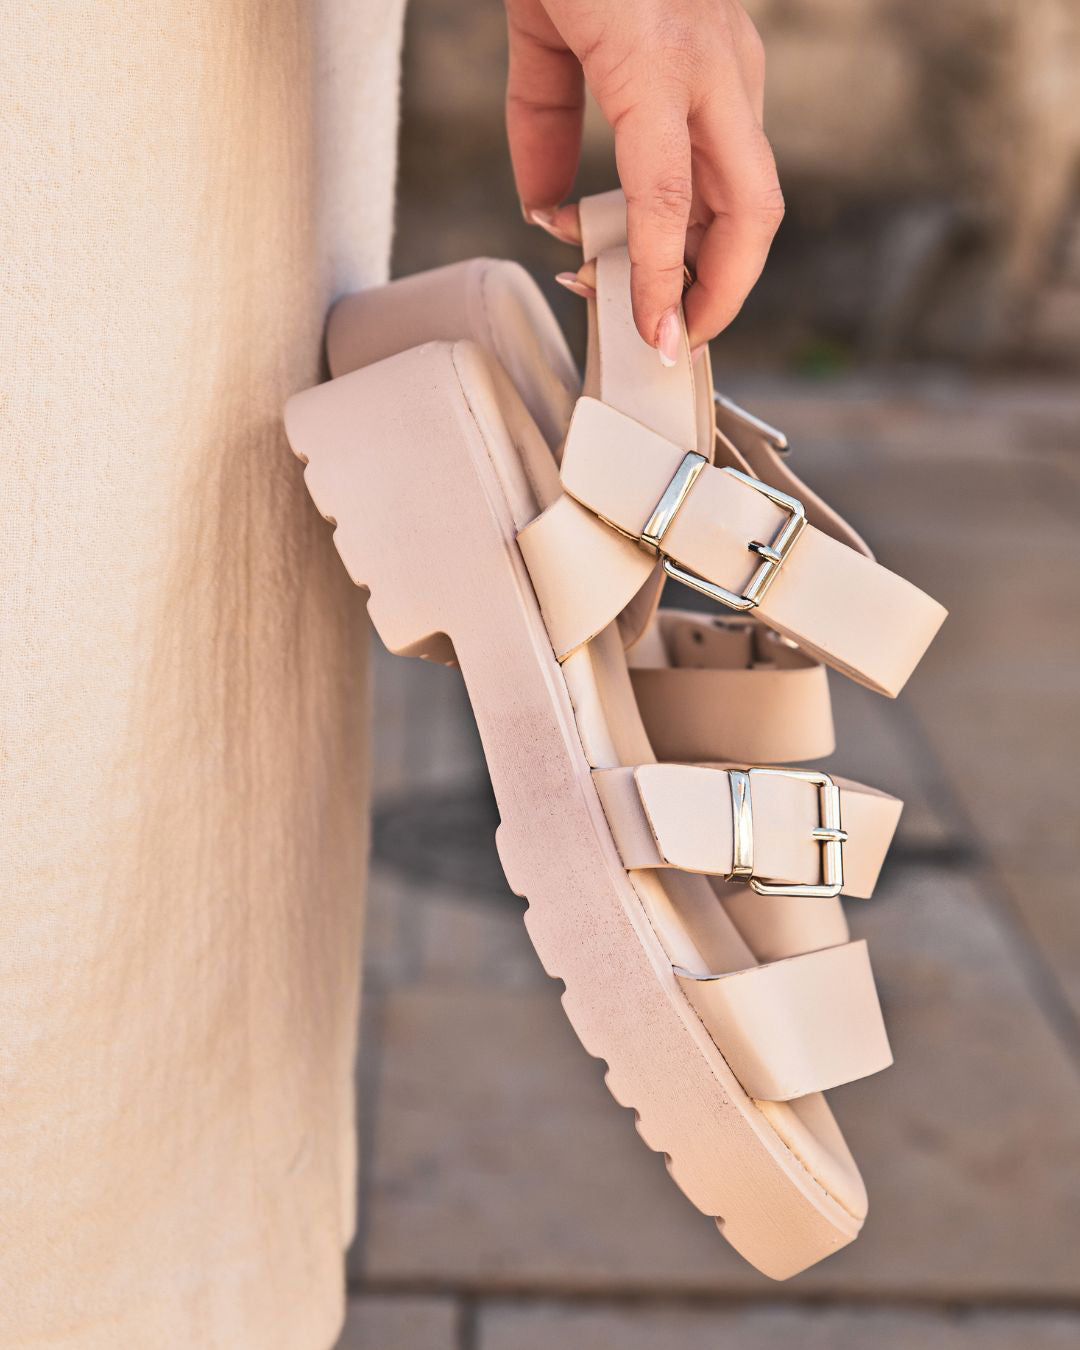 Sandale femme plateforme confort beige - Giorgia - Casualmode.fr